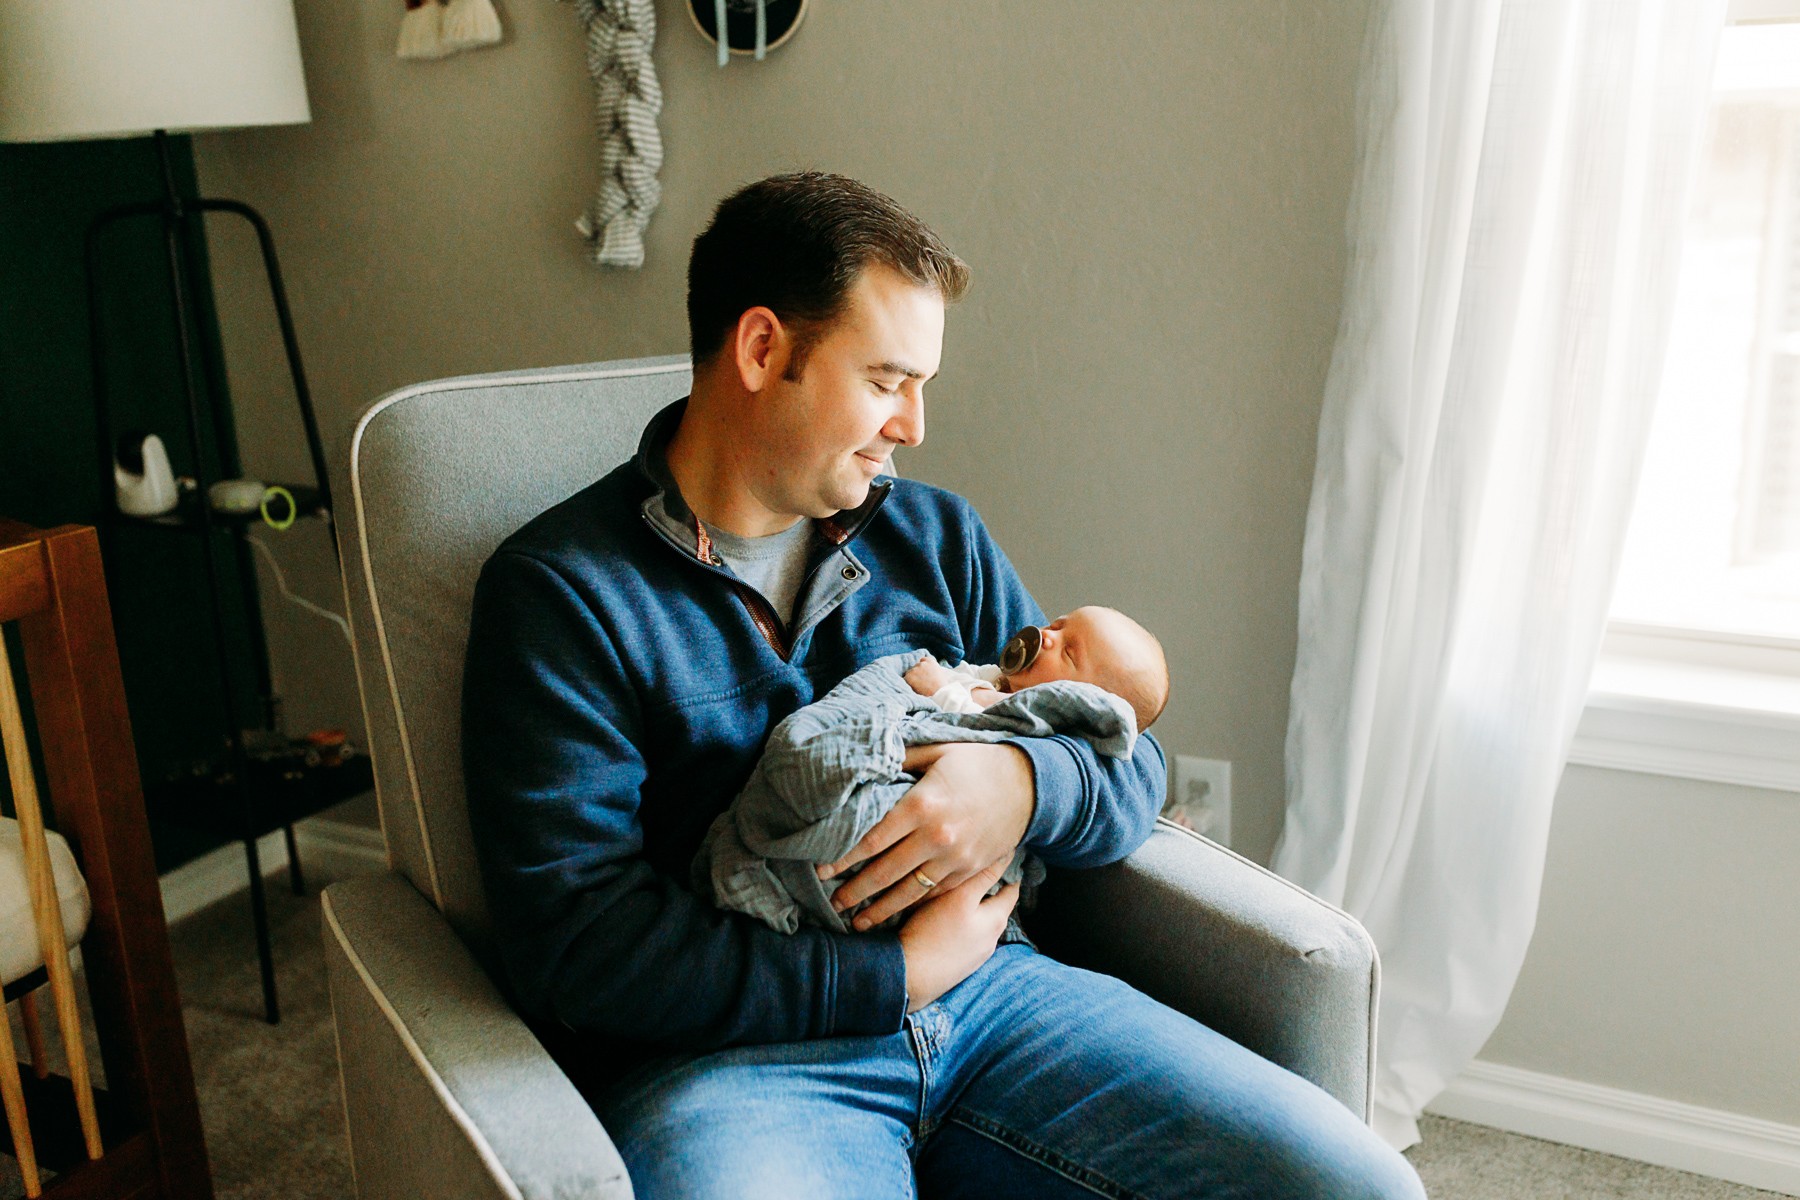 In the newborn's nursery, a dad rocks his newborn son.